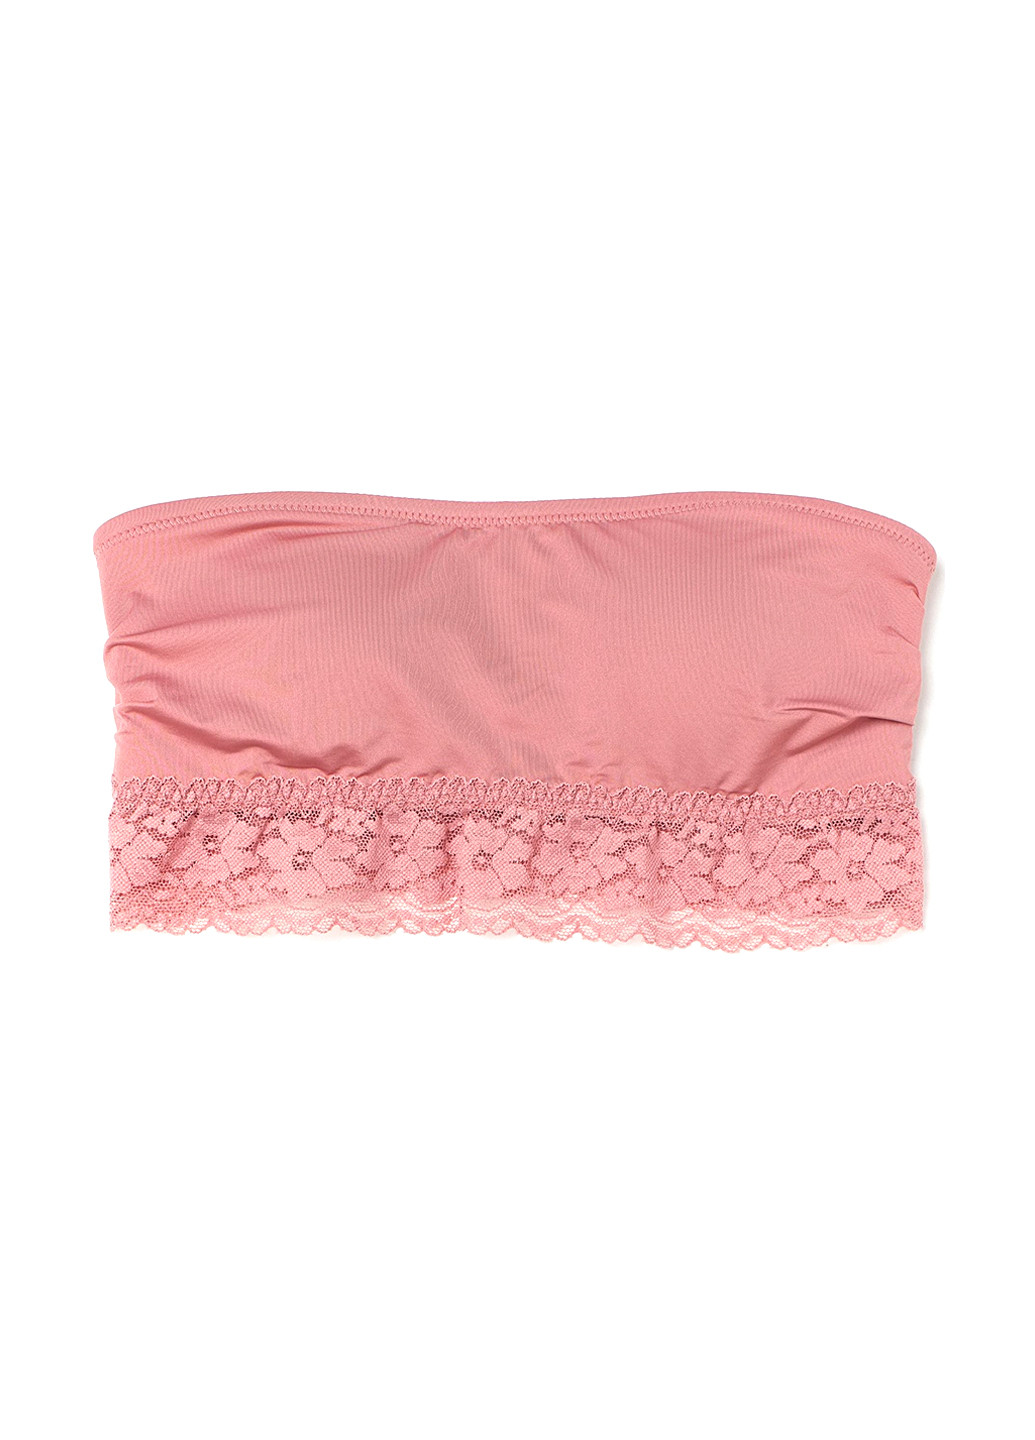 Топ H&M однотонный розовый домашний трикотаж, полиамид